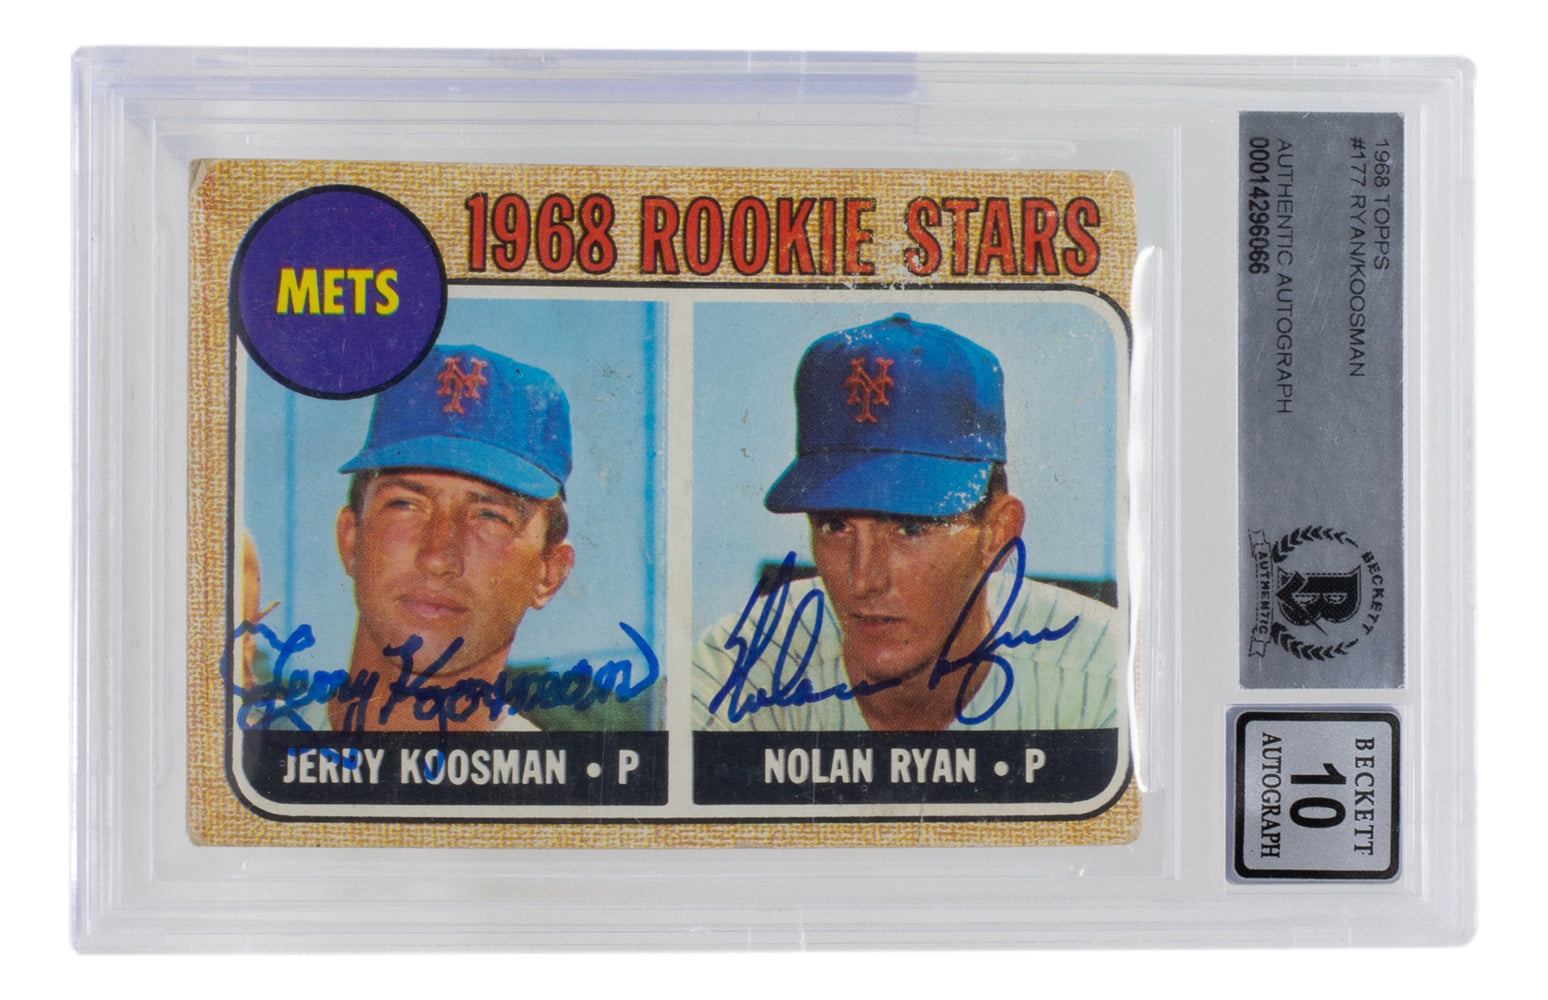 1968 TOPPS #177 1968 ROOKIE STARS JERRY KOOSMAN & NOLAN RYAN BASEBALL CARD  - Isabell Auction